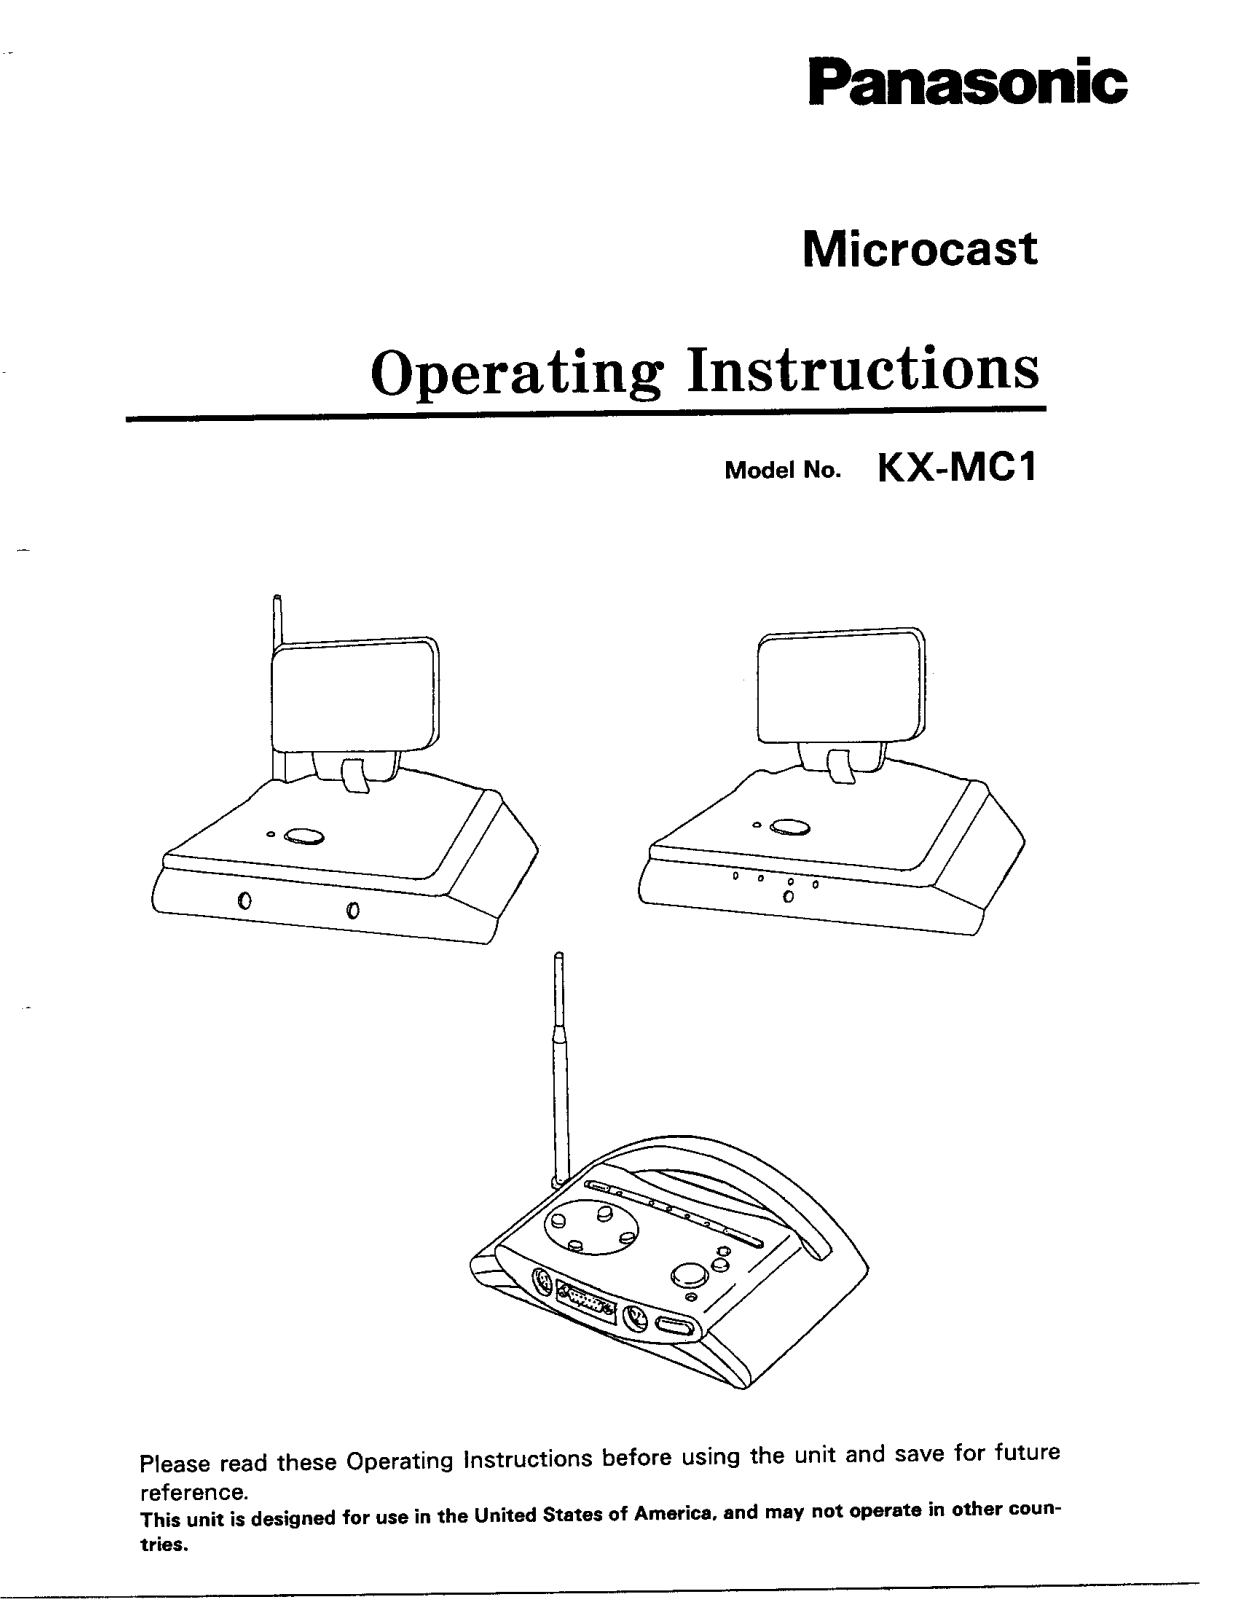 Panasonic 96NKX MC1PC Users Manual